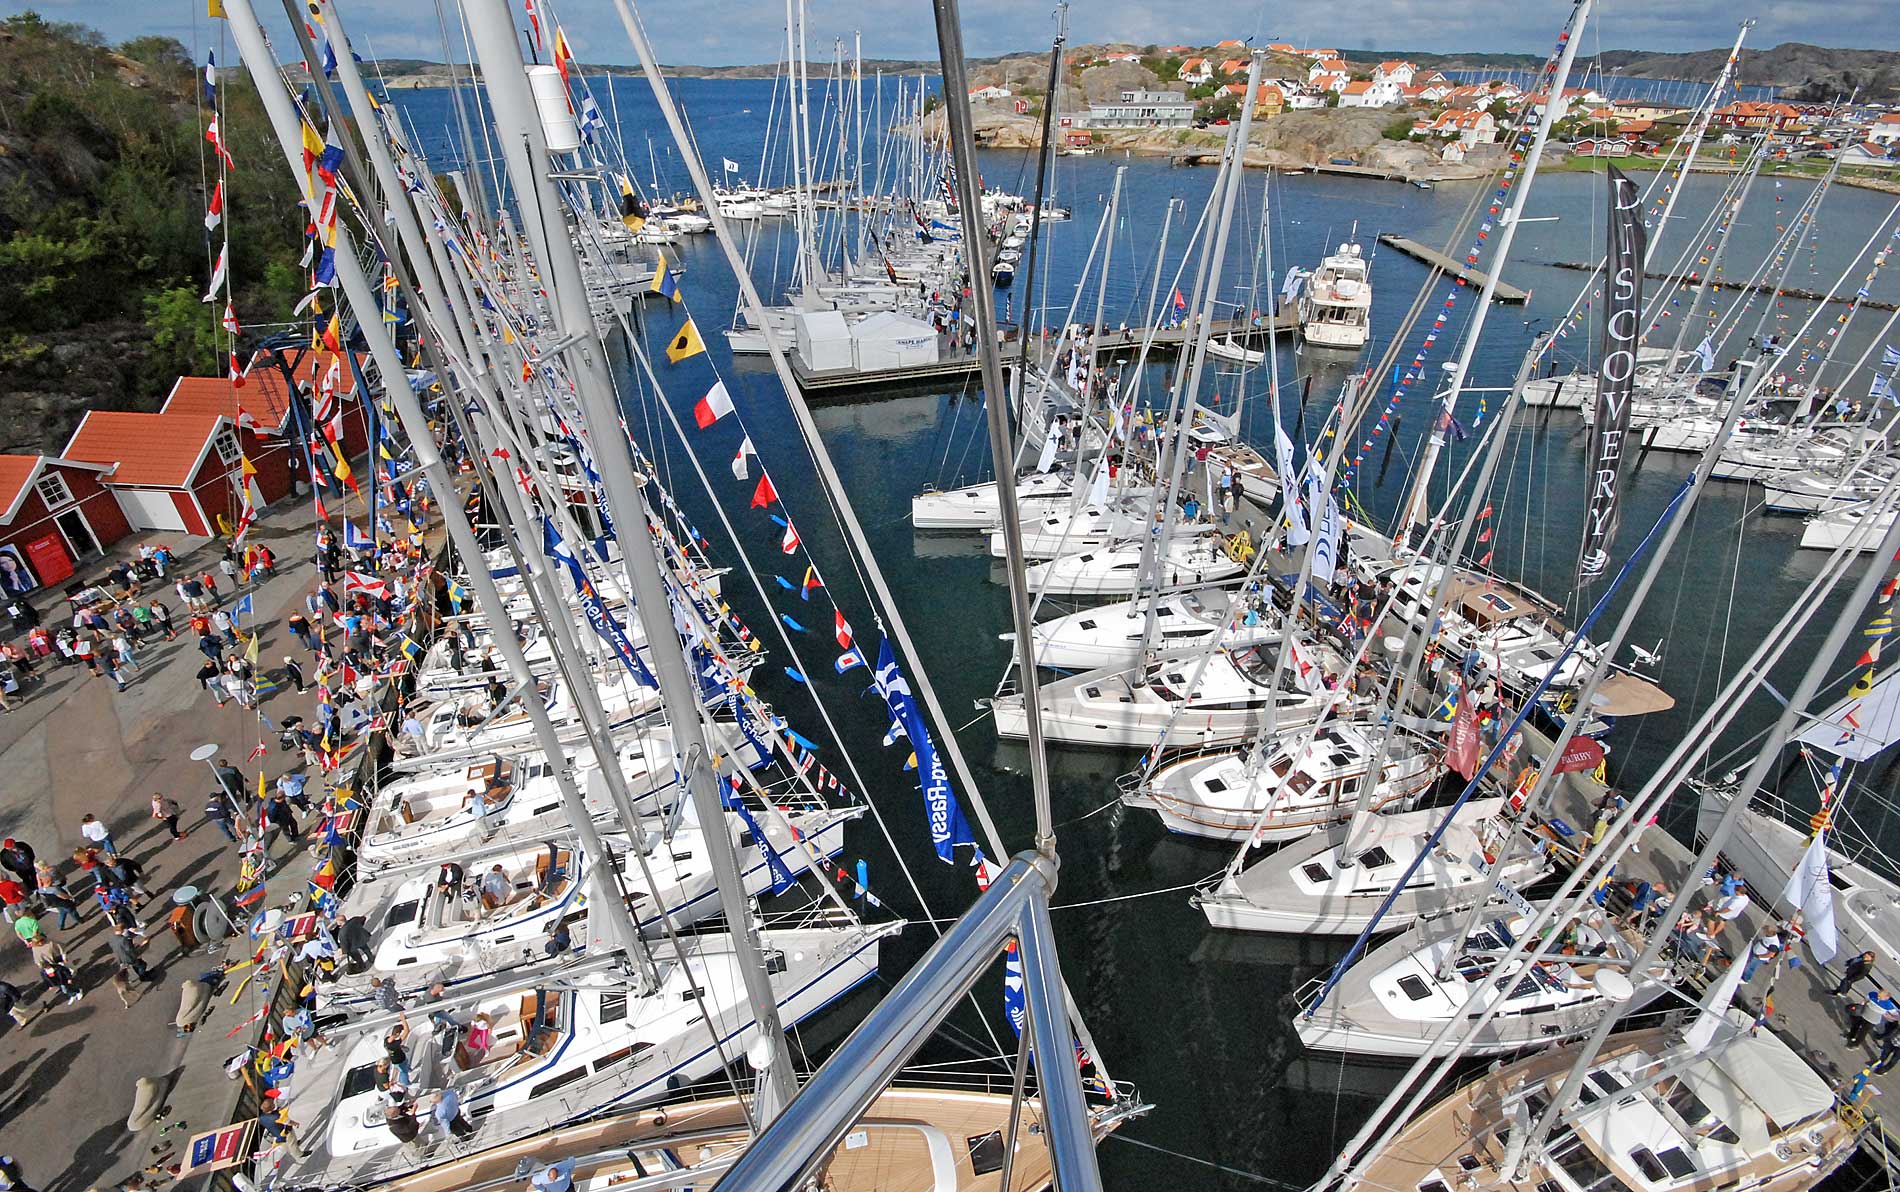 Open Yard in Ellös - Scandinavia's largest sailboat show